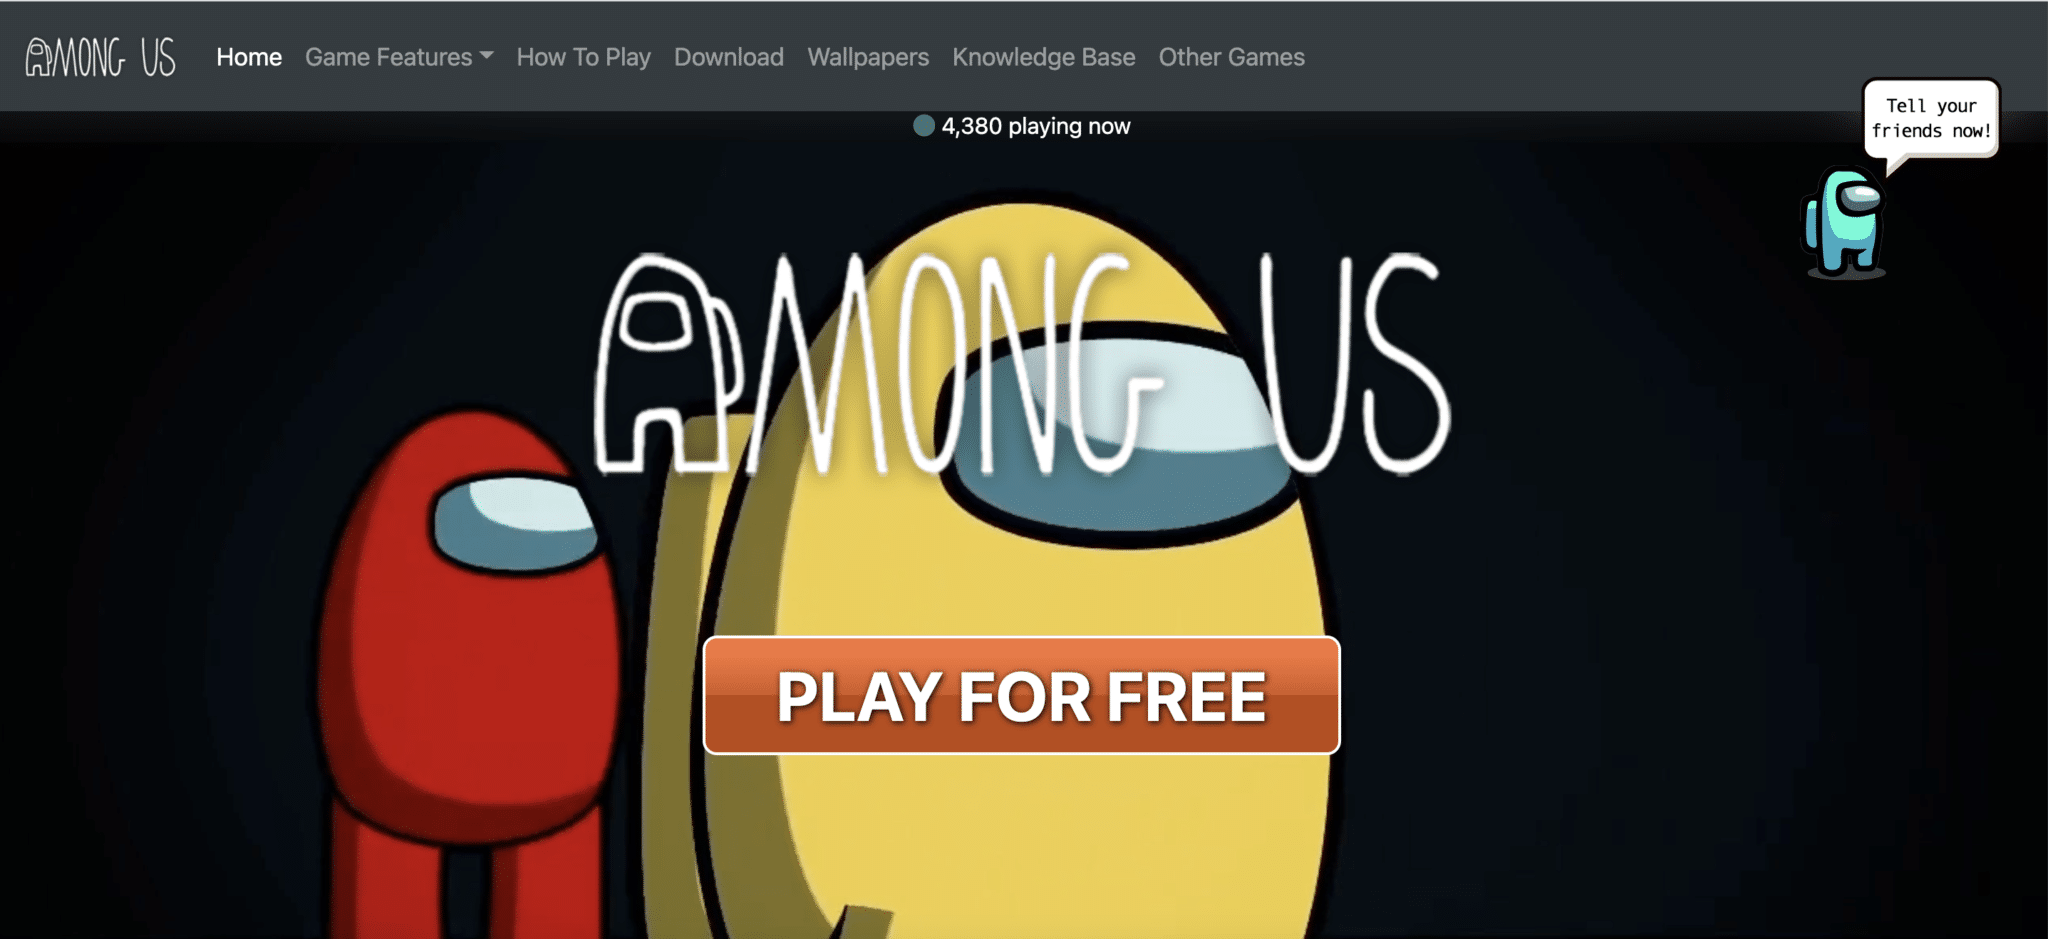 AMONG US.IO free online game on